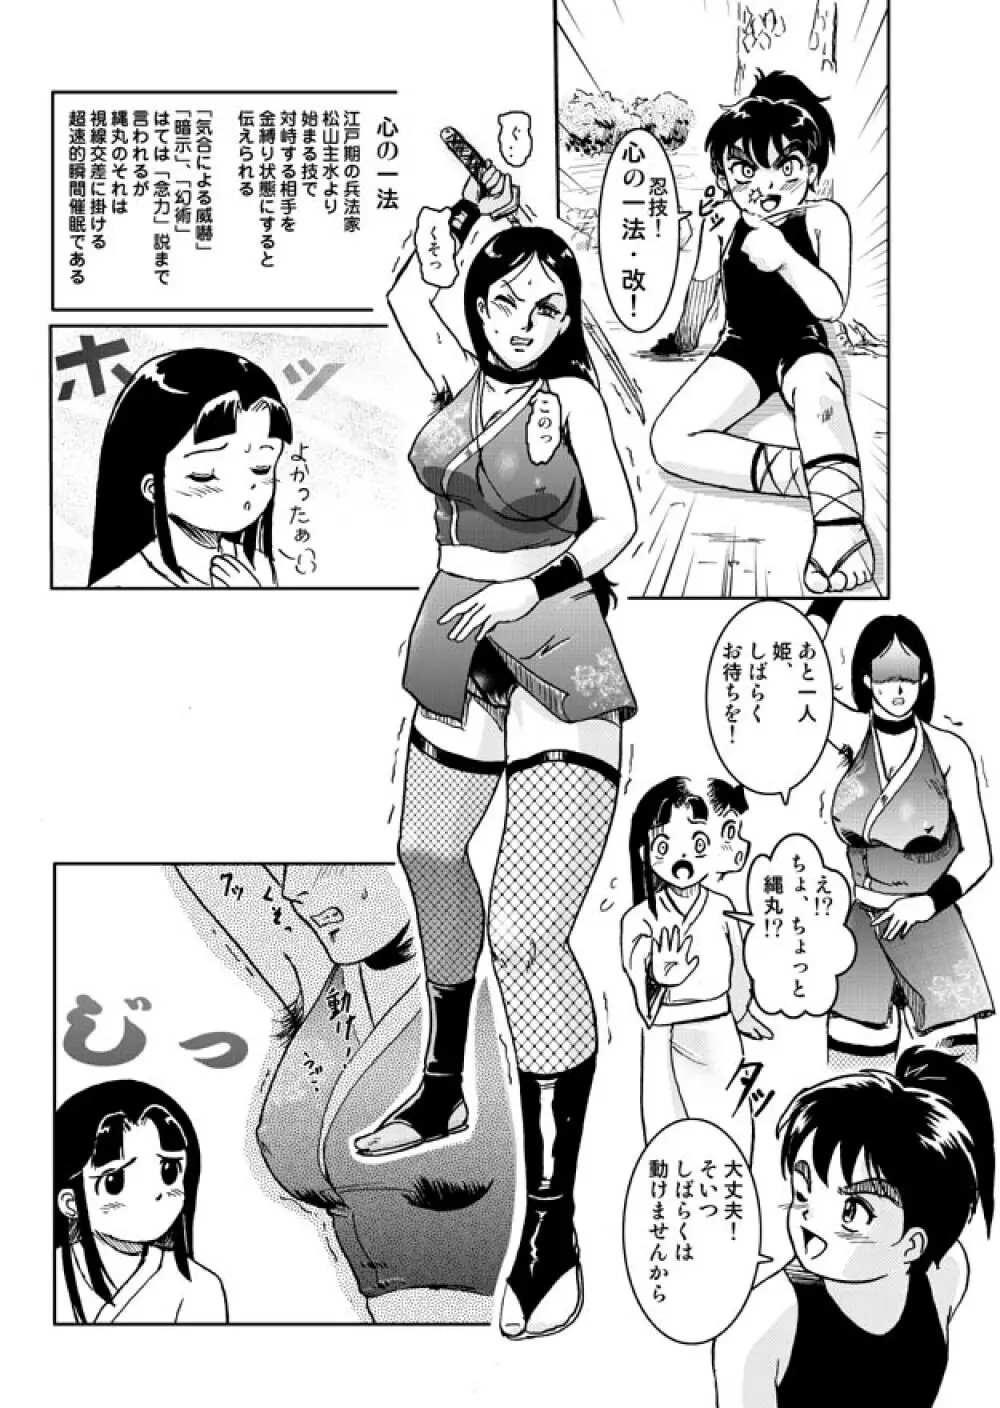 Same-themed manga about kid fighting female ninjas from japanese imageboard. 10ページ